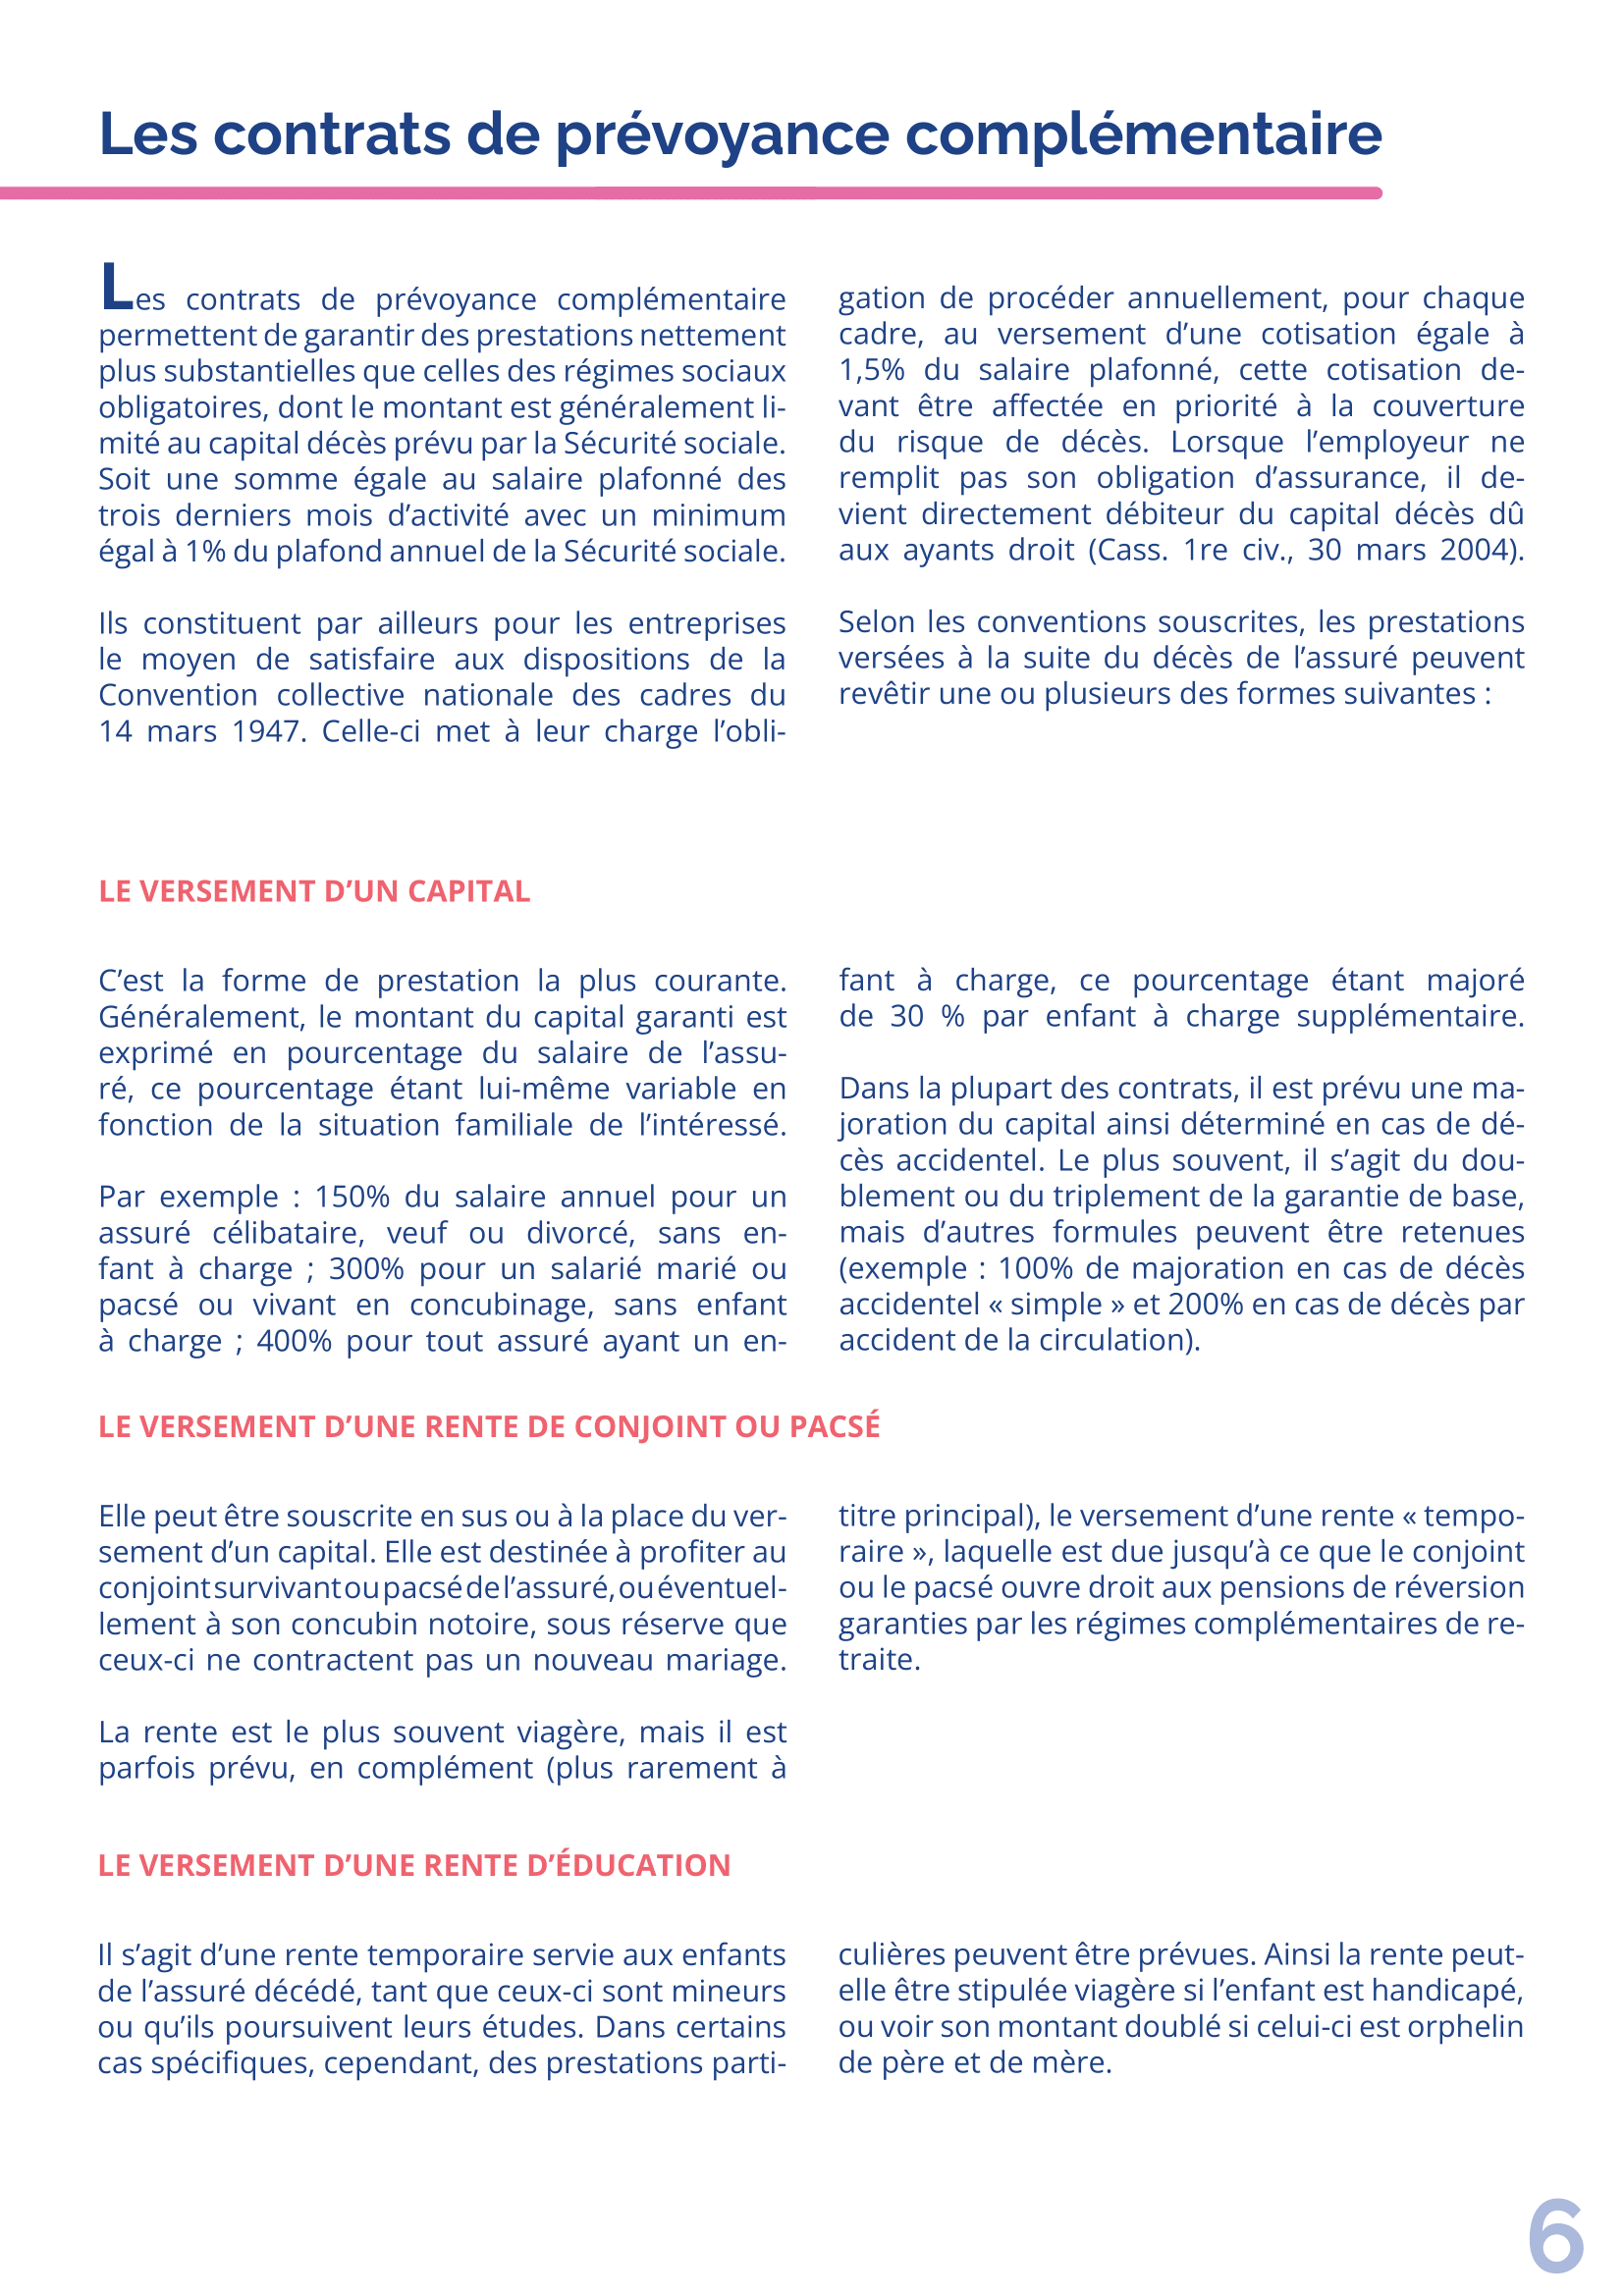 Guide du responsable RH page 5